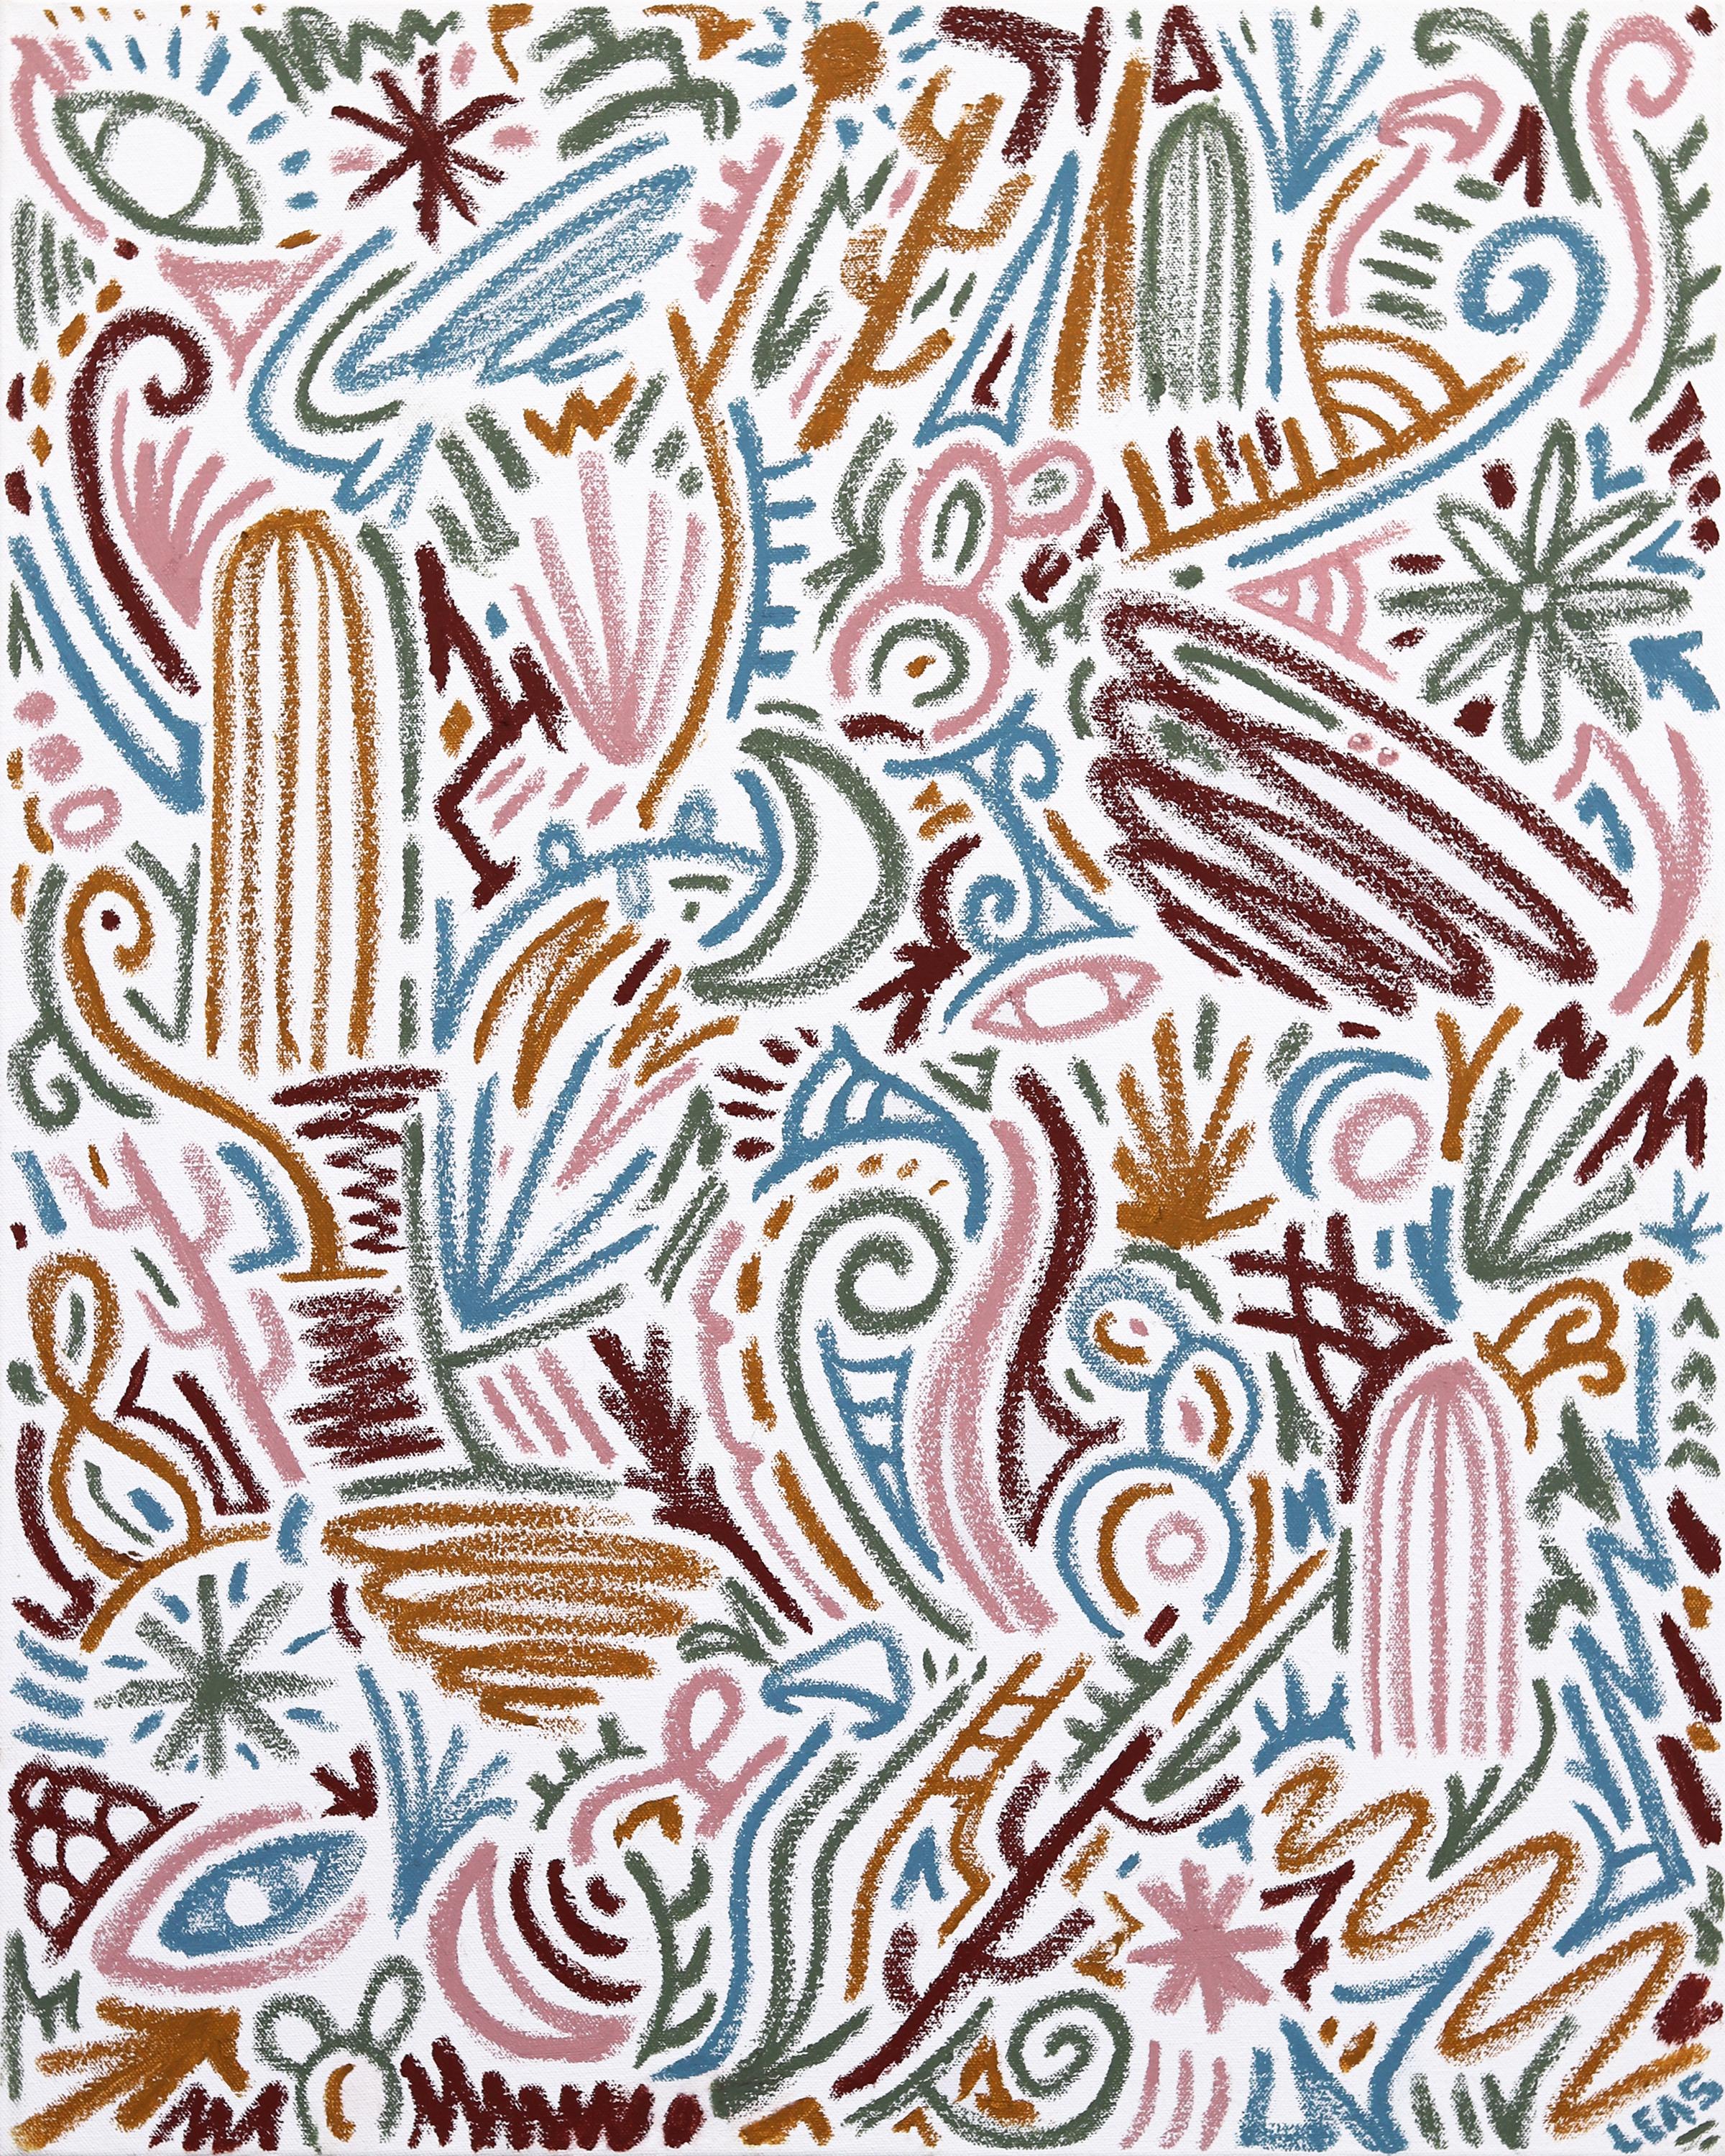 Aerial Magic - Dynamik Linear Design Composition Aborigine inspiriertes Gemälde